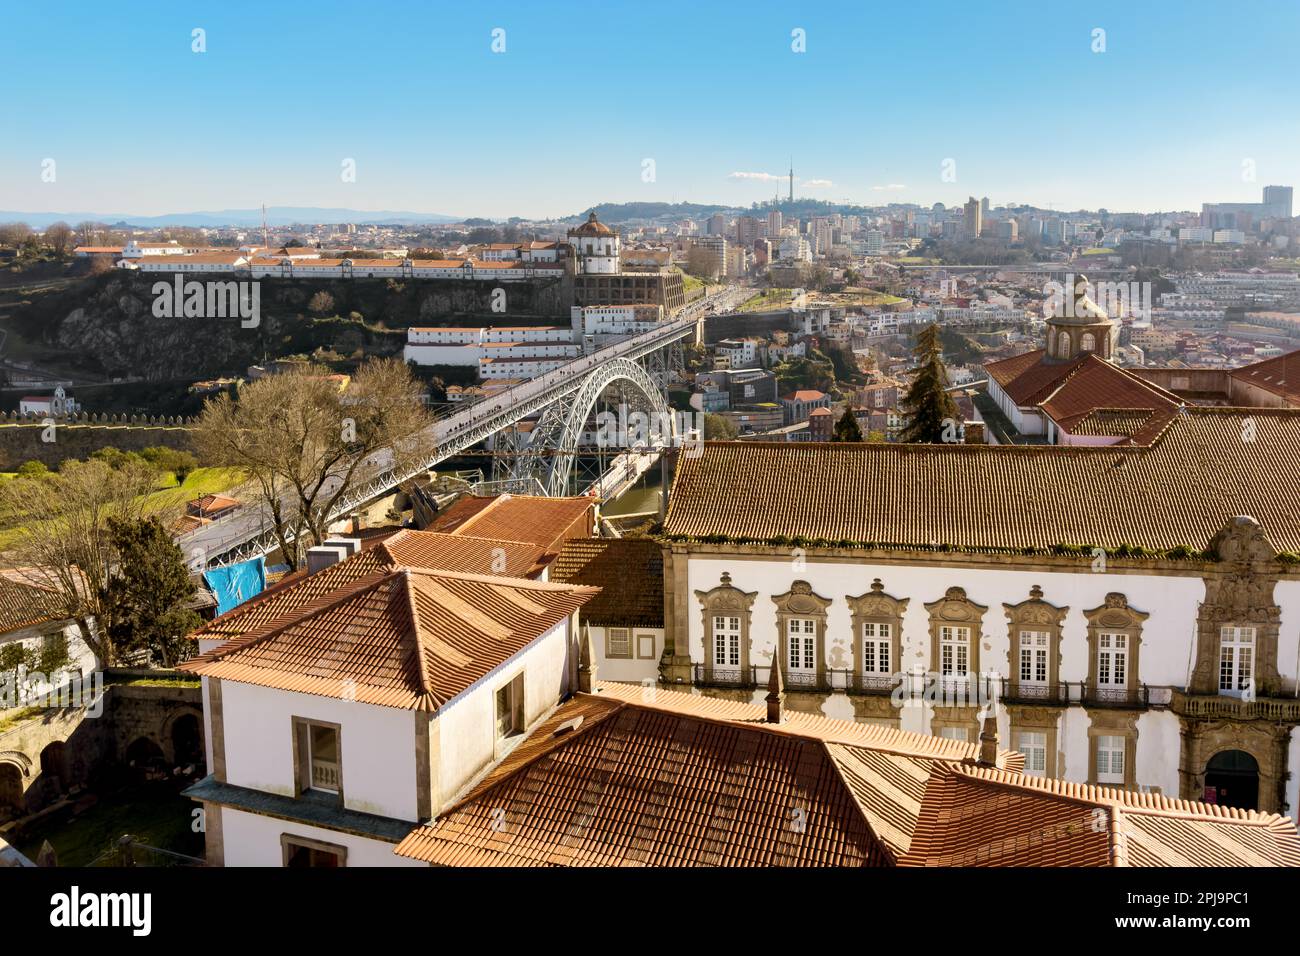 Skyline of Porto city, Portugal. High quality photo Stock Photo